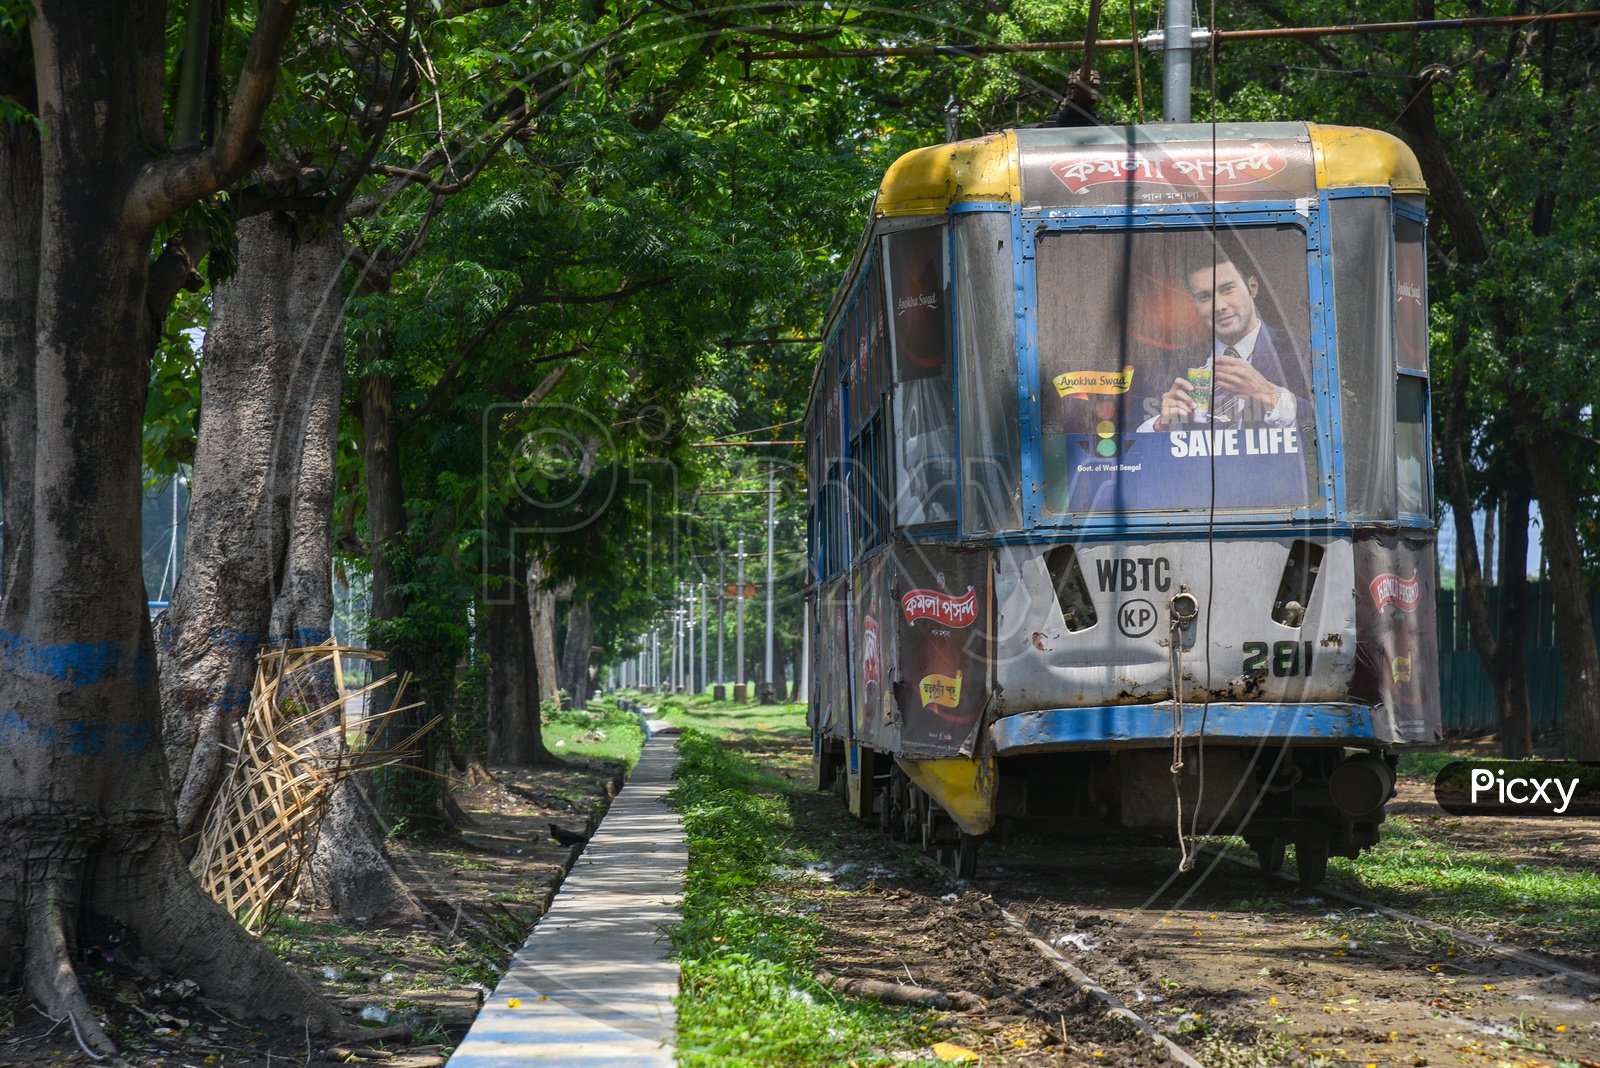 West Bengal Transport Corporation ( WBTC ) tram Services Tram